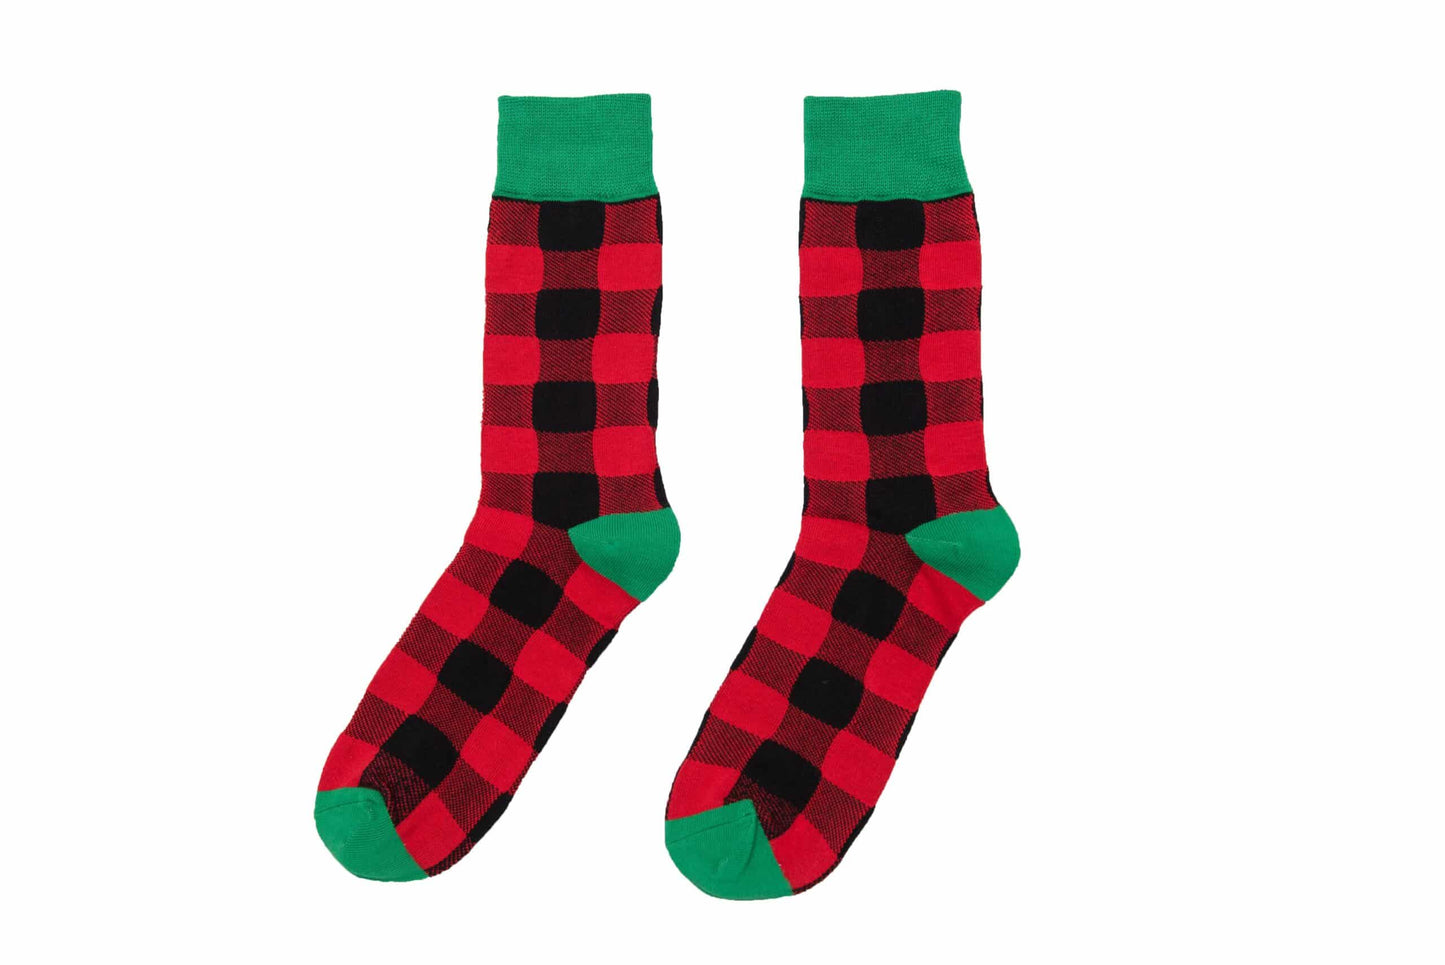 A pair of Cross Hatch Stripes socks.